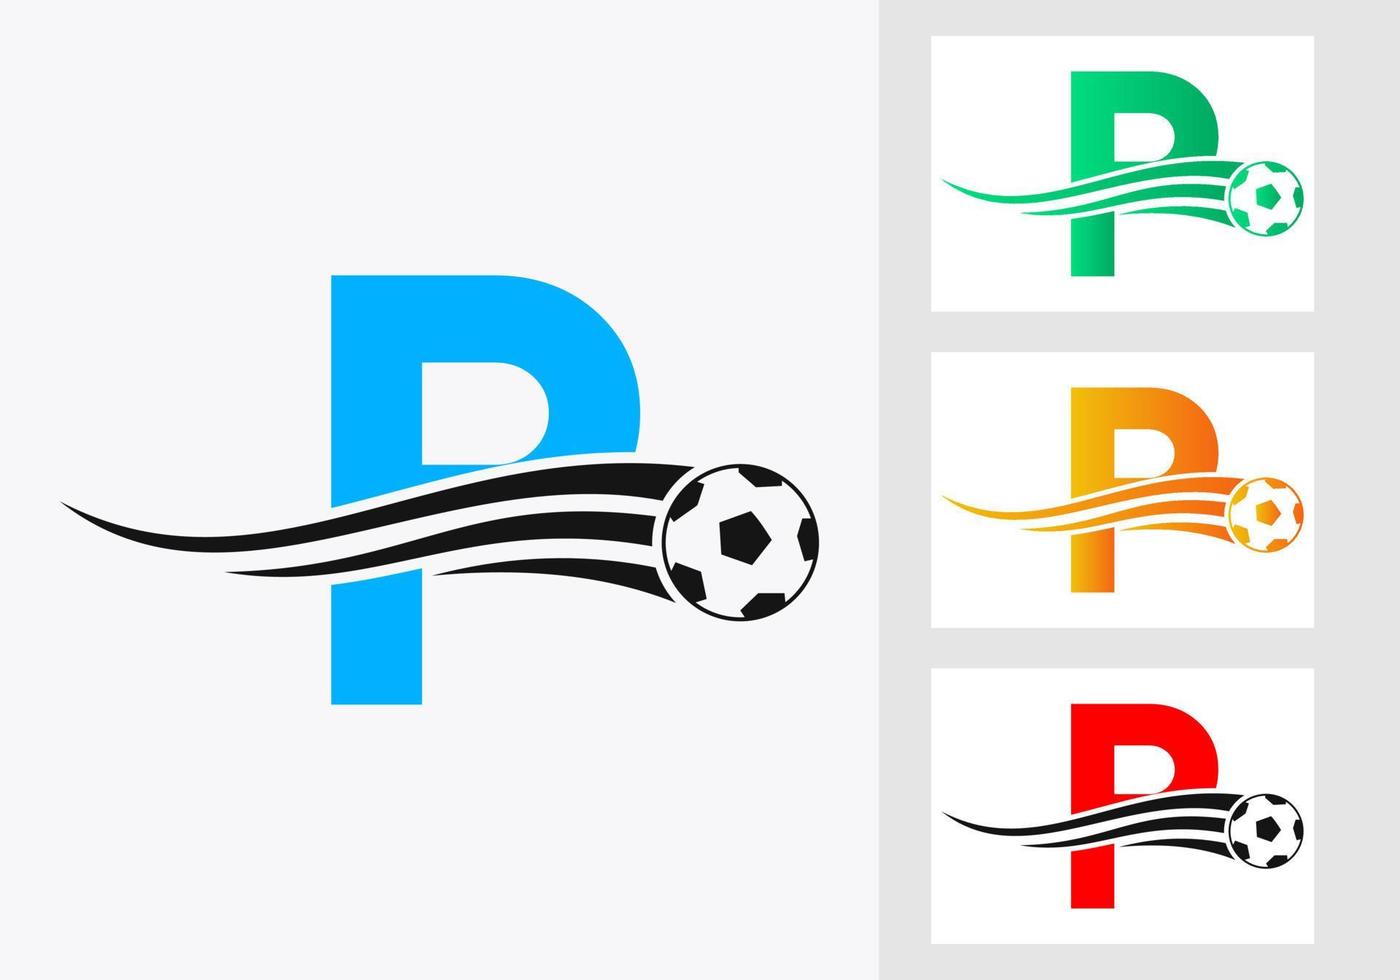 Soccer Football Logo On Letter P Sign. Soccer Club Emblem Concept Of Football Team Icon vector